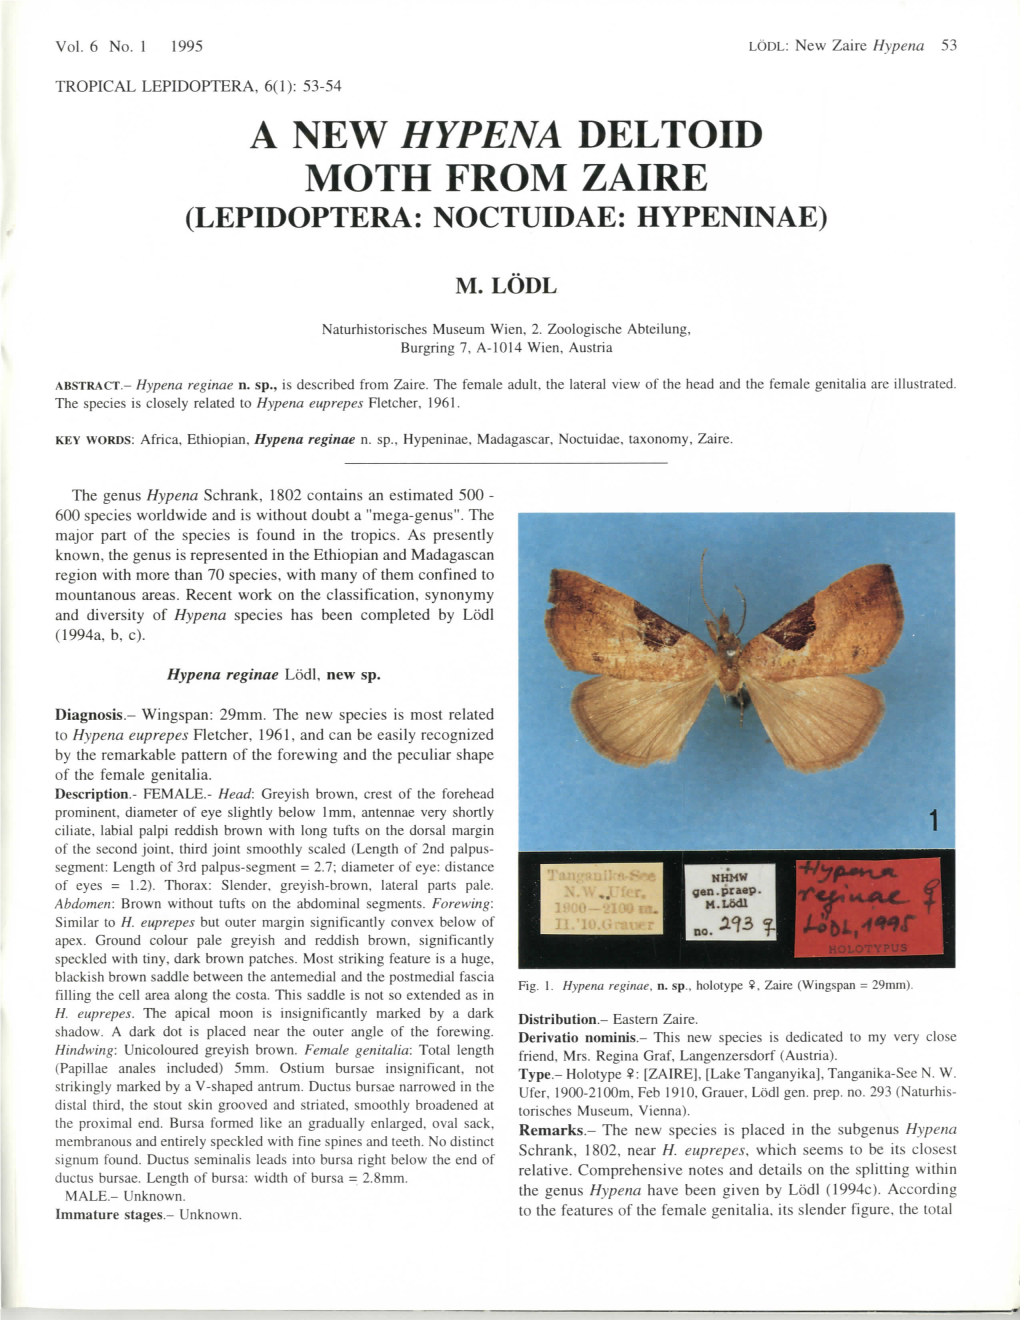 A New Hypena Deltoid Moth from Zaire (Lepidoptera: Noctuidae: Hypeninae)